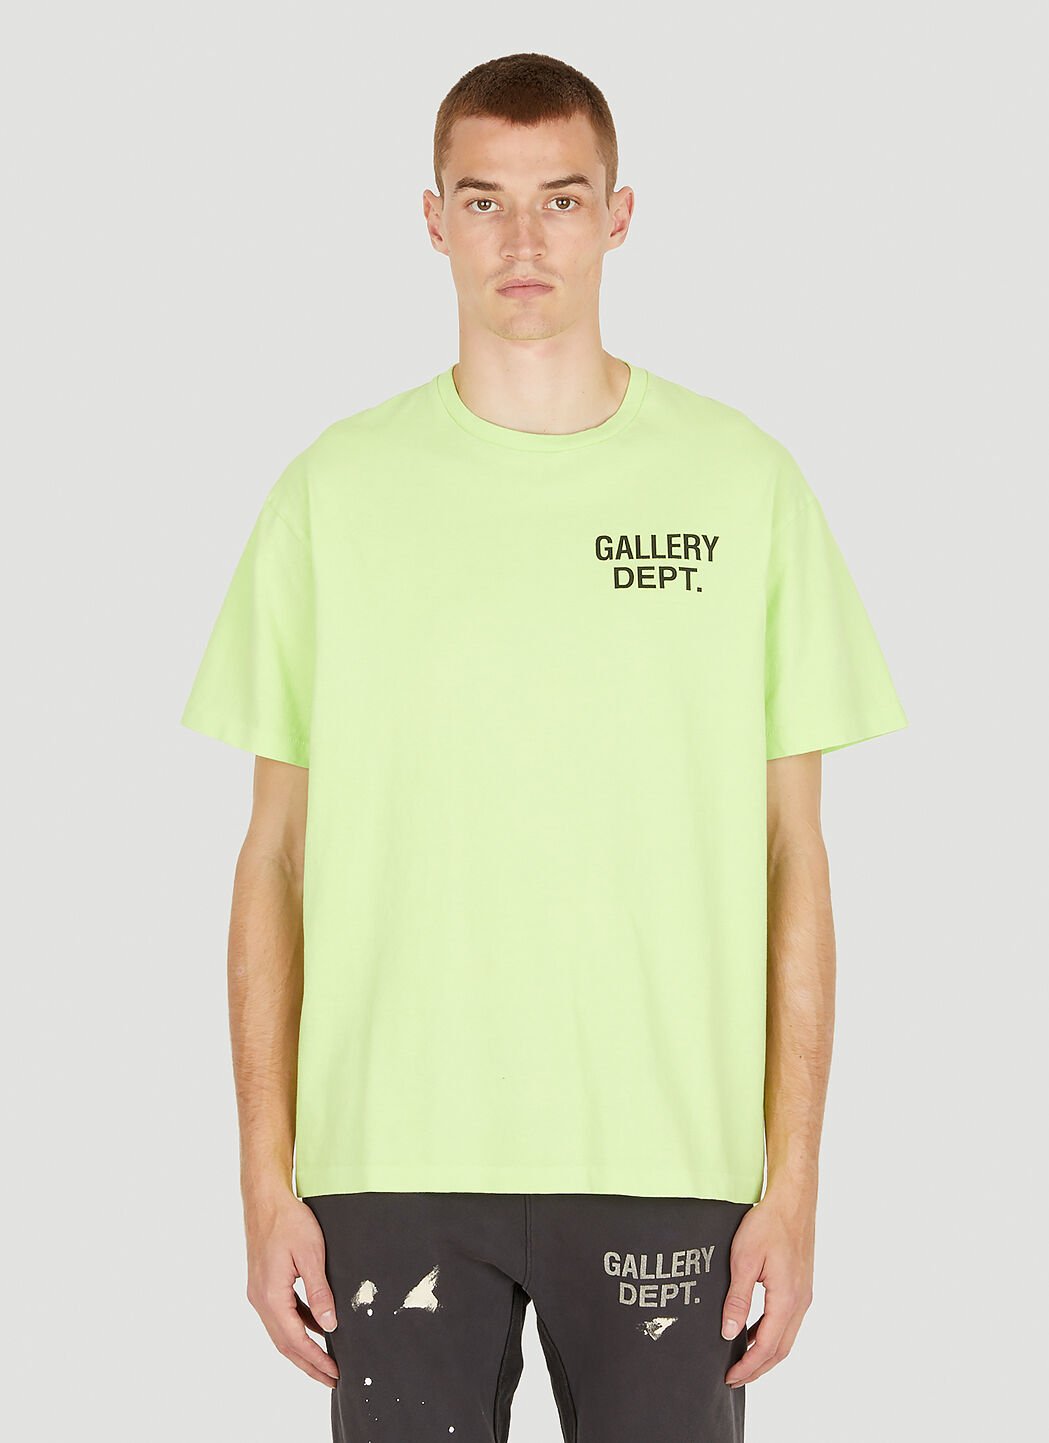 Gallery Dept. Souvenir T-Shirt ホワイト gdp0153039